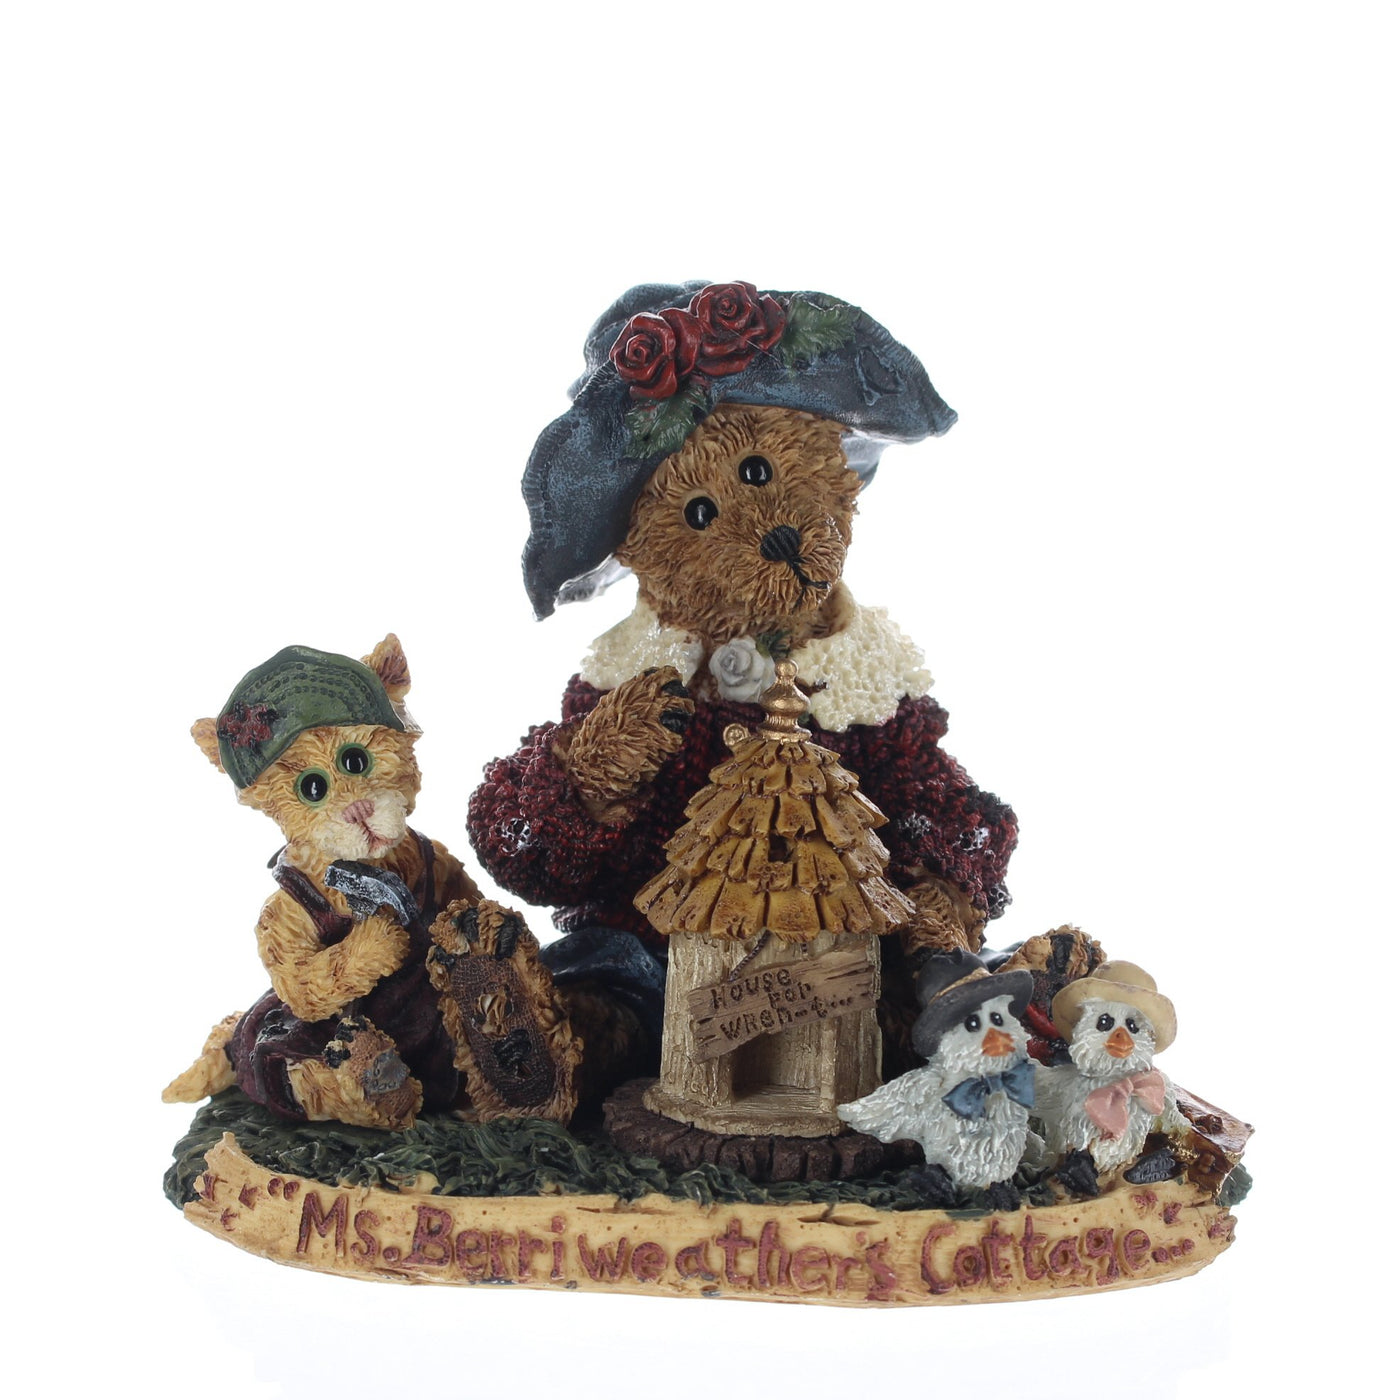 Boyds-Bears-Friends-Bearstone-Figurine-Ms.-Berriweathers-Cottage-01998-41_01